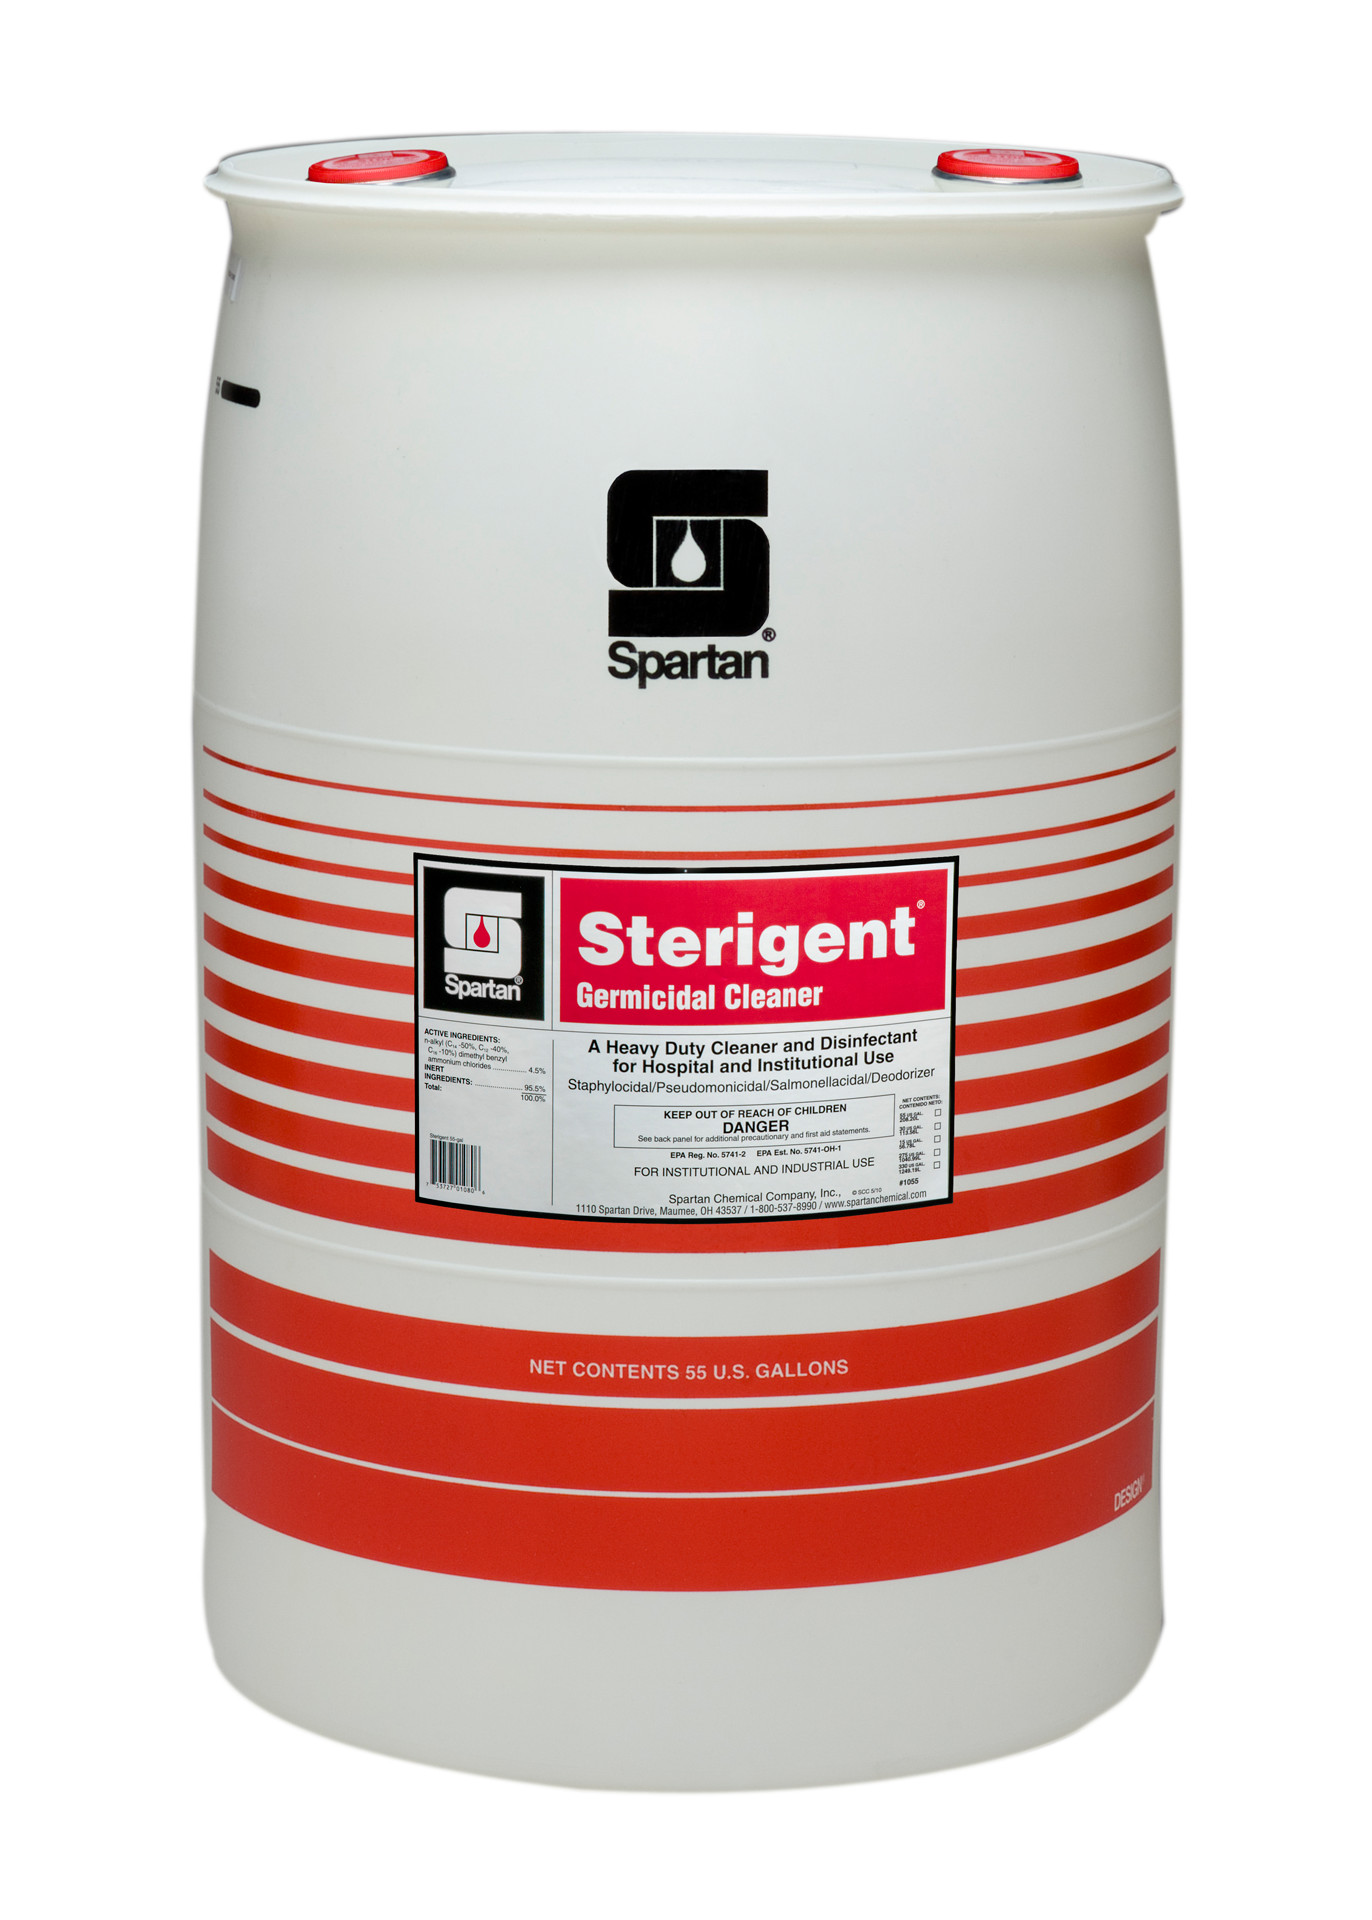 Spartan Chemical Company Sterigent, 55 GAL DRUM